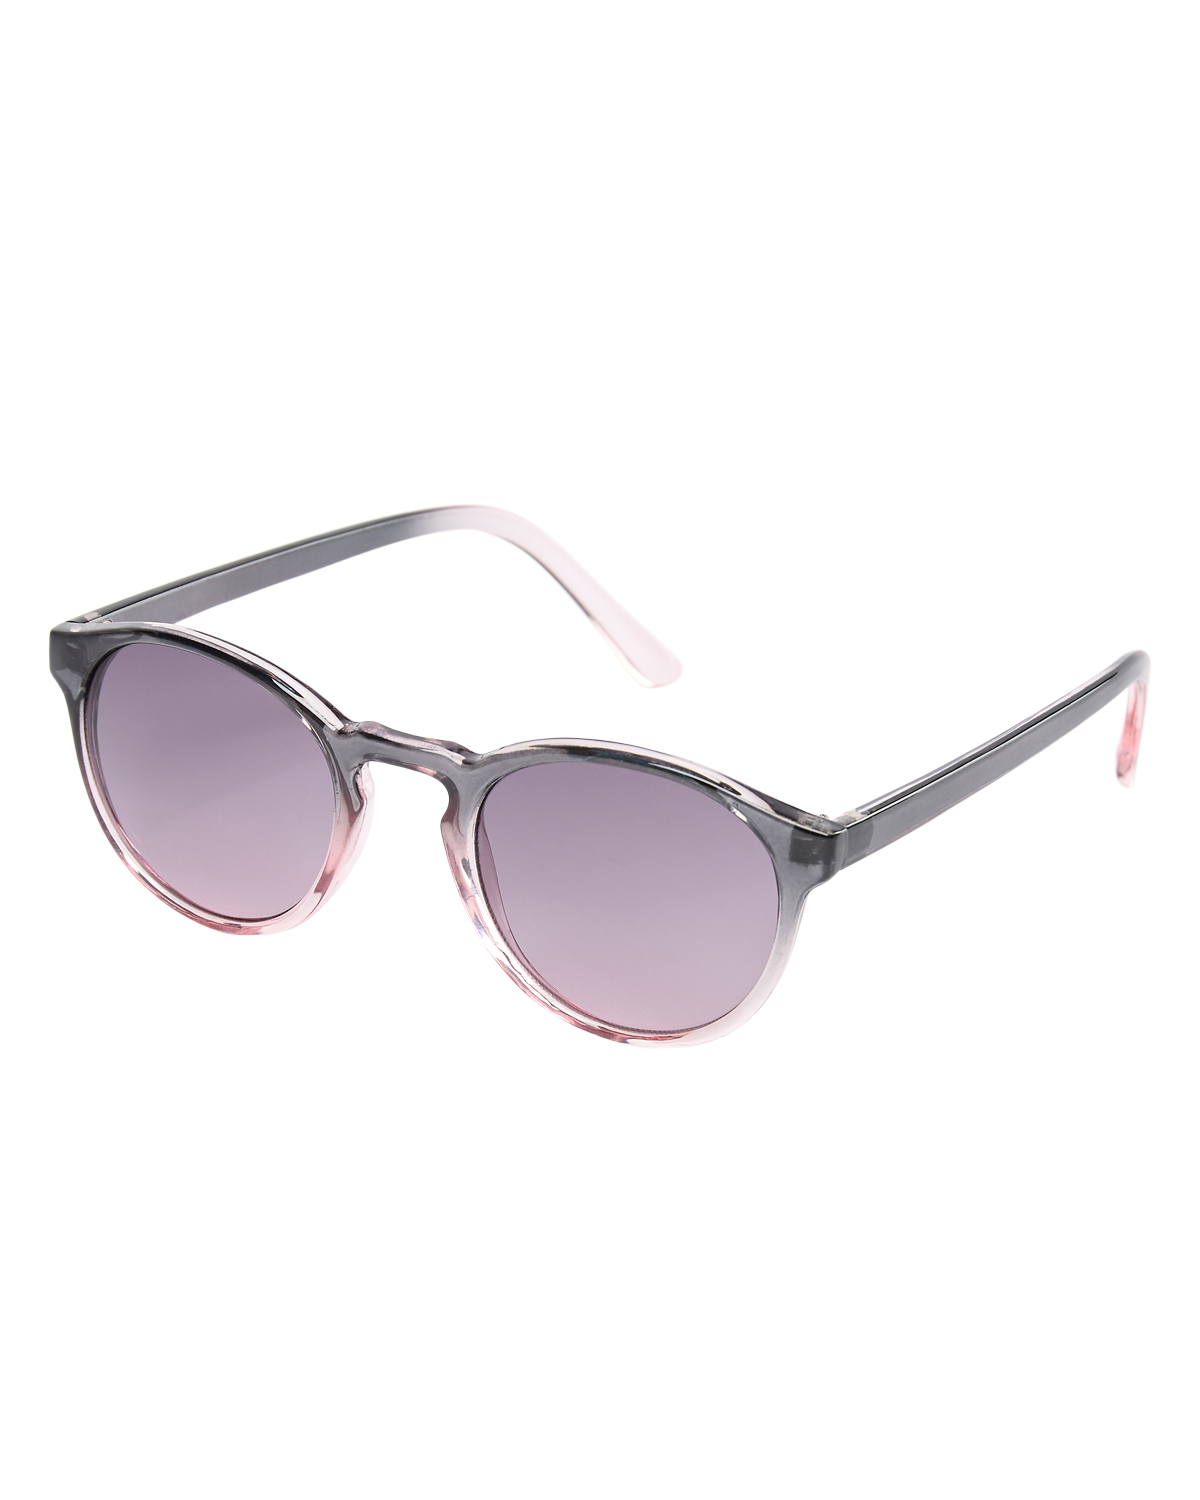 Nümph Nufuklig Sunglasses, sort/rosa